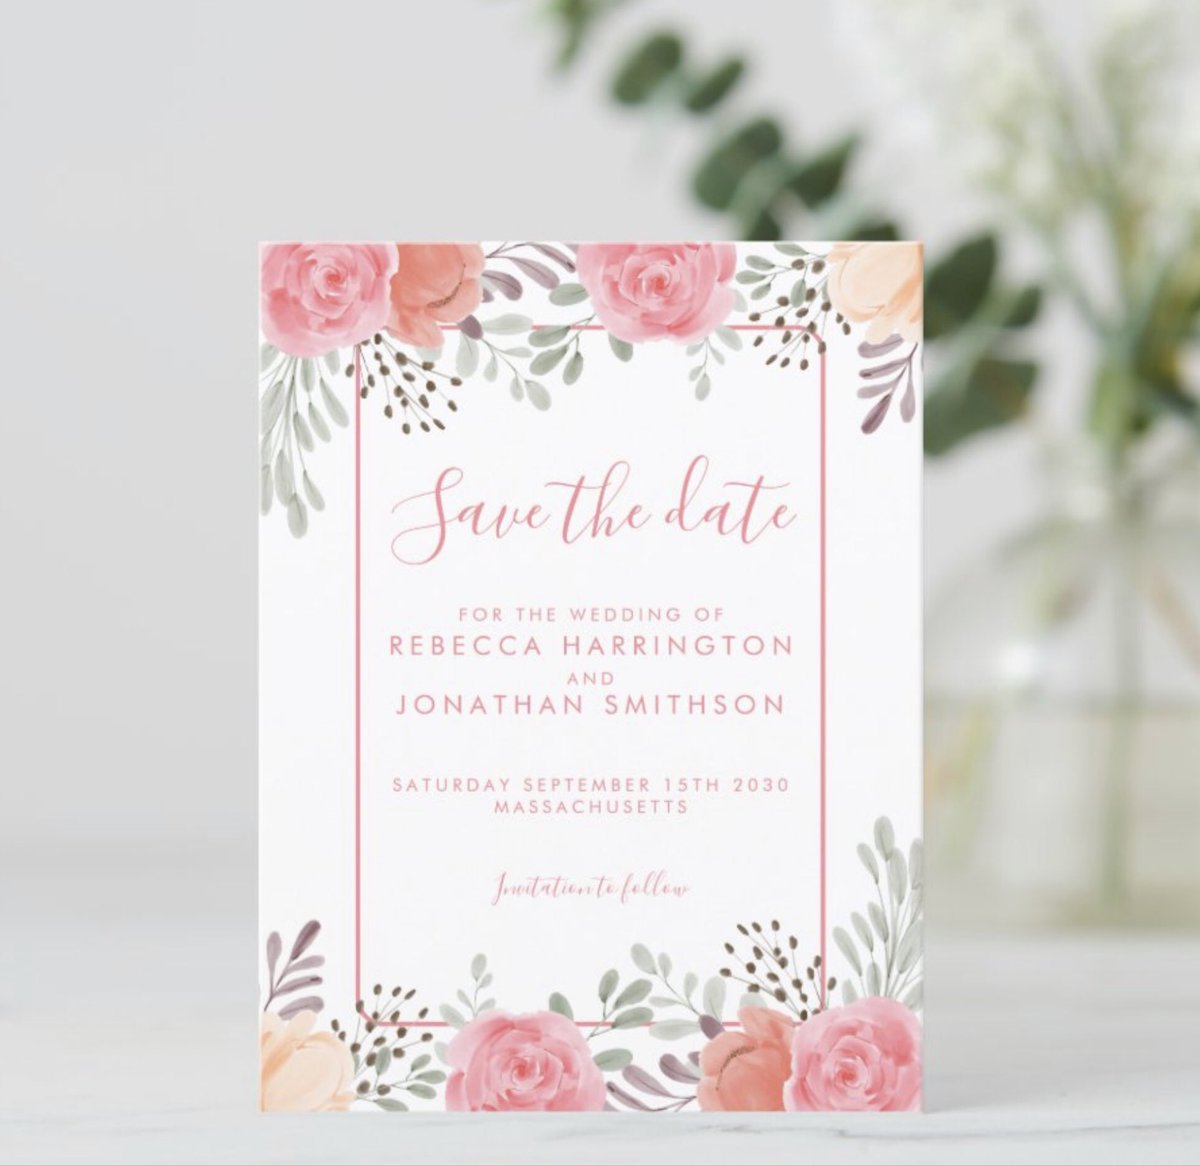 HALF PRICE offer - use code NEWYEARIDEAS on this Blush Pink Watercolor Floral Save The Date Invitation Postcard zazzle.com/z/aduypfbq?rf=… via @zazzle
#WeddingPlanner #Savethedate #blushpink #Flowers #floralart #zazzlemade #weddings #invitation #postcard